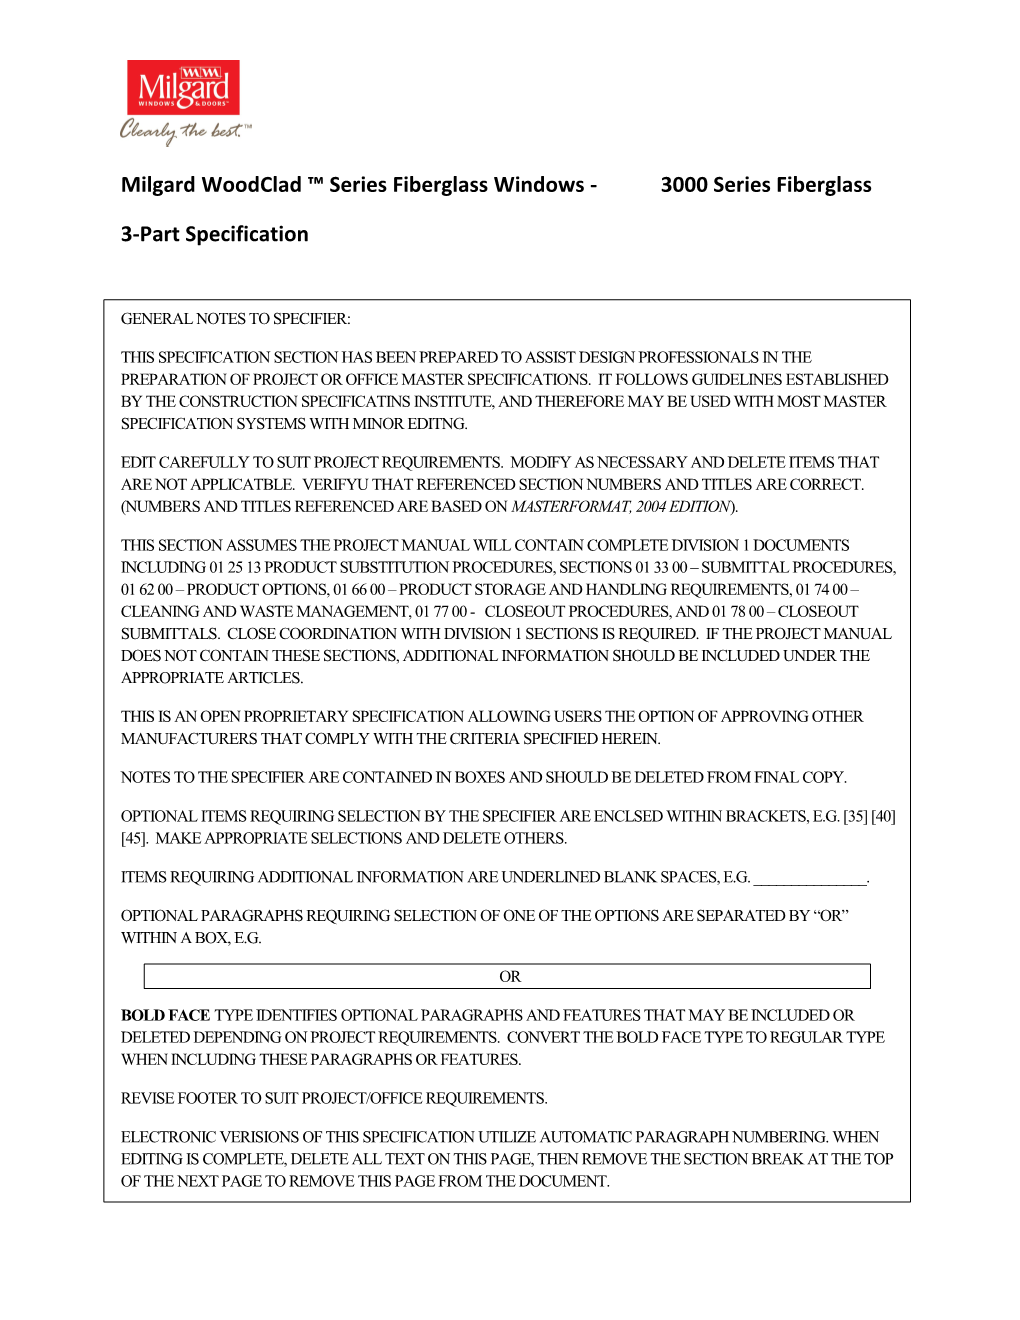 Milgard Woodclad Series Fiberglass Windows -3000 Series Fiberglass